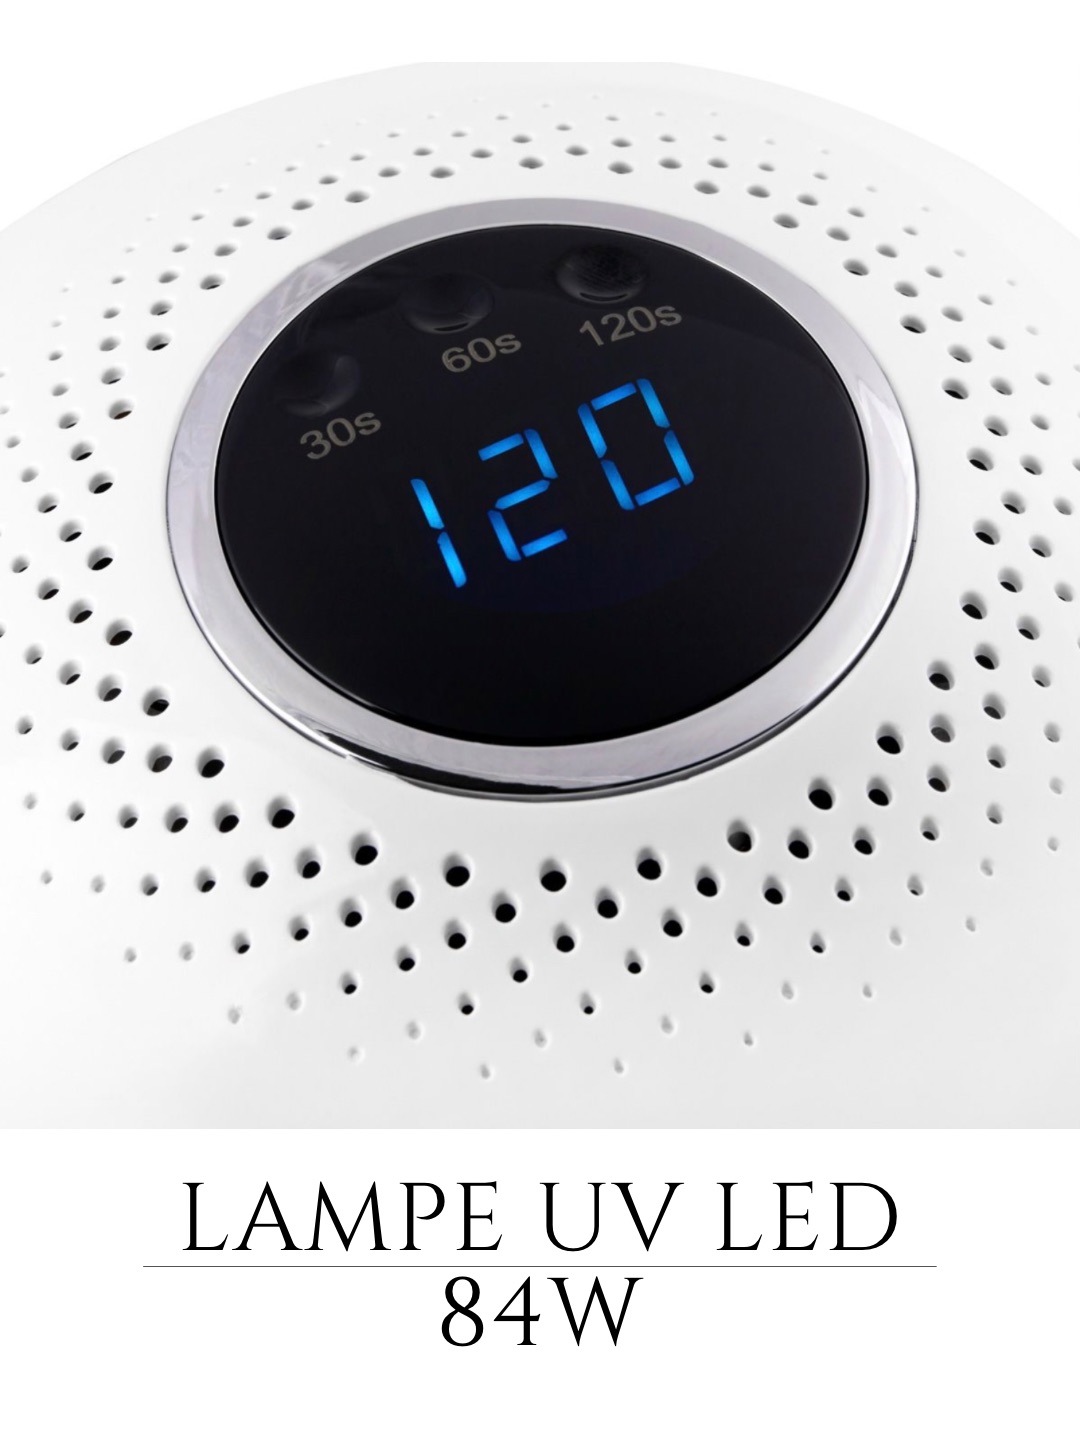 Lampe UV LED 84w